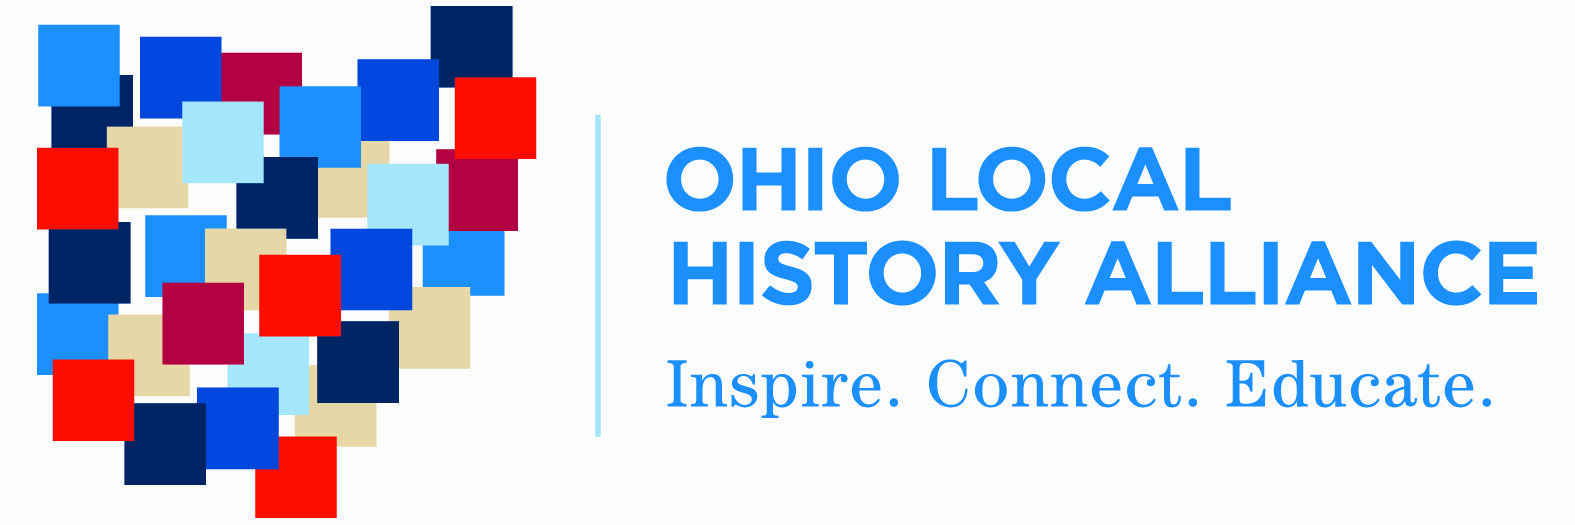 Ohio Local History Alliance